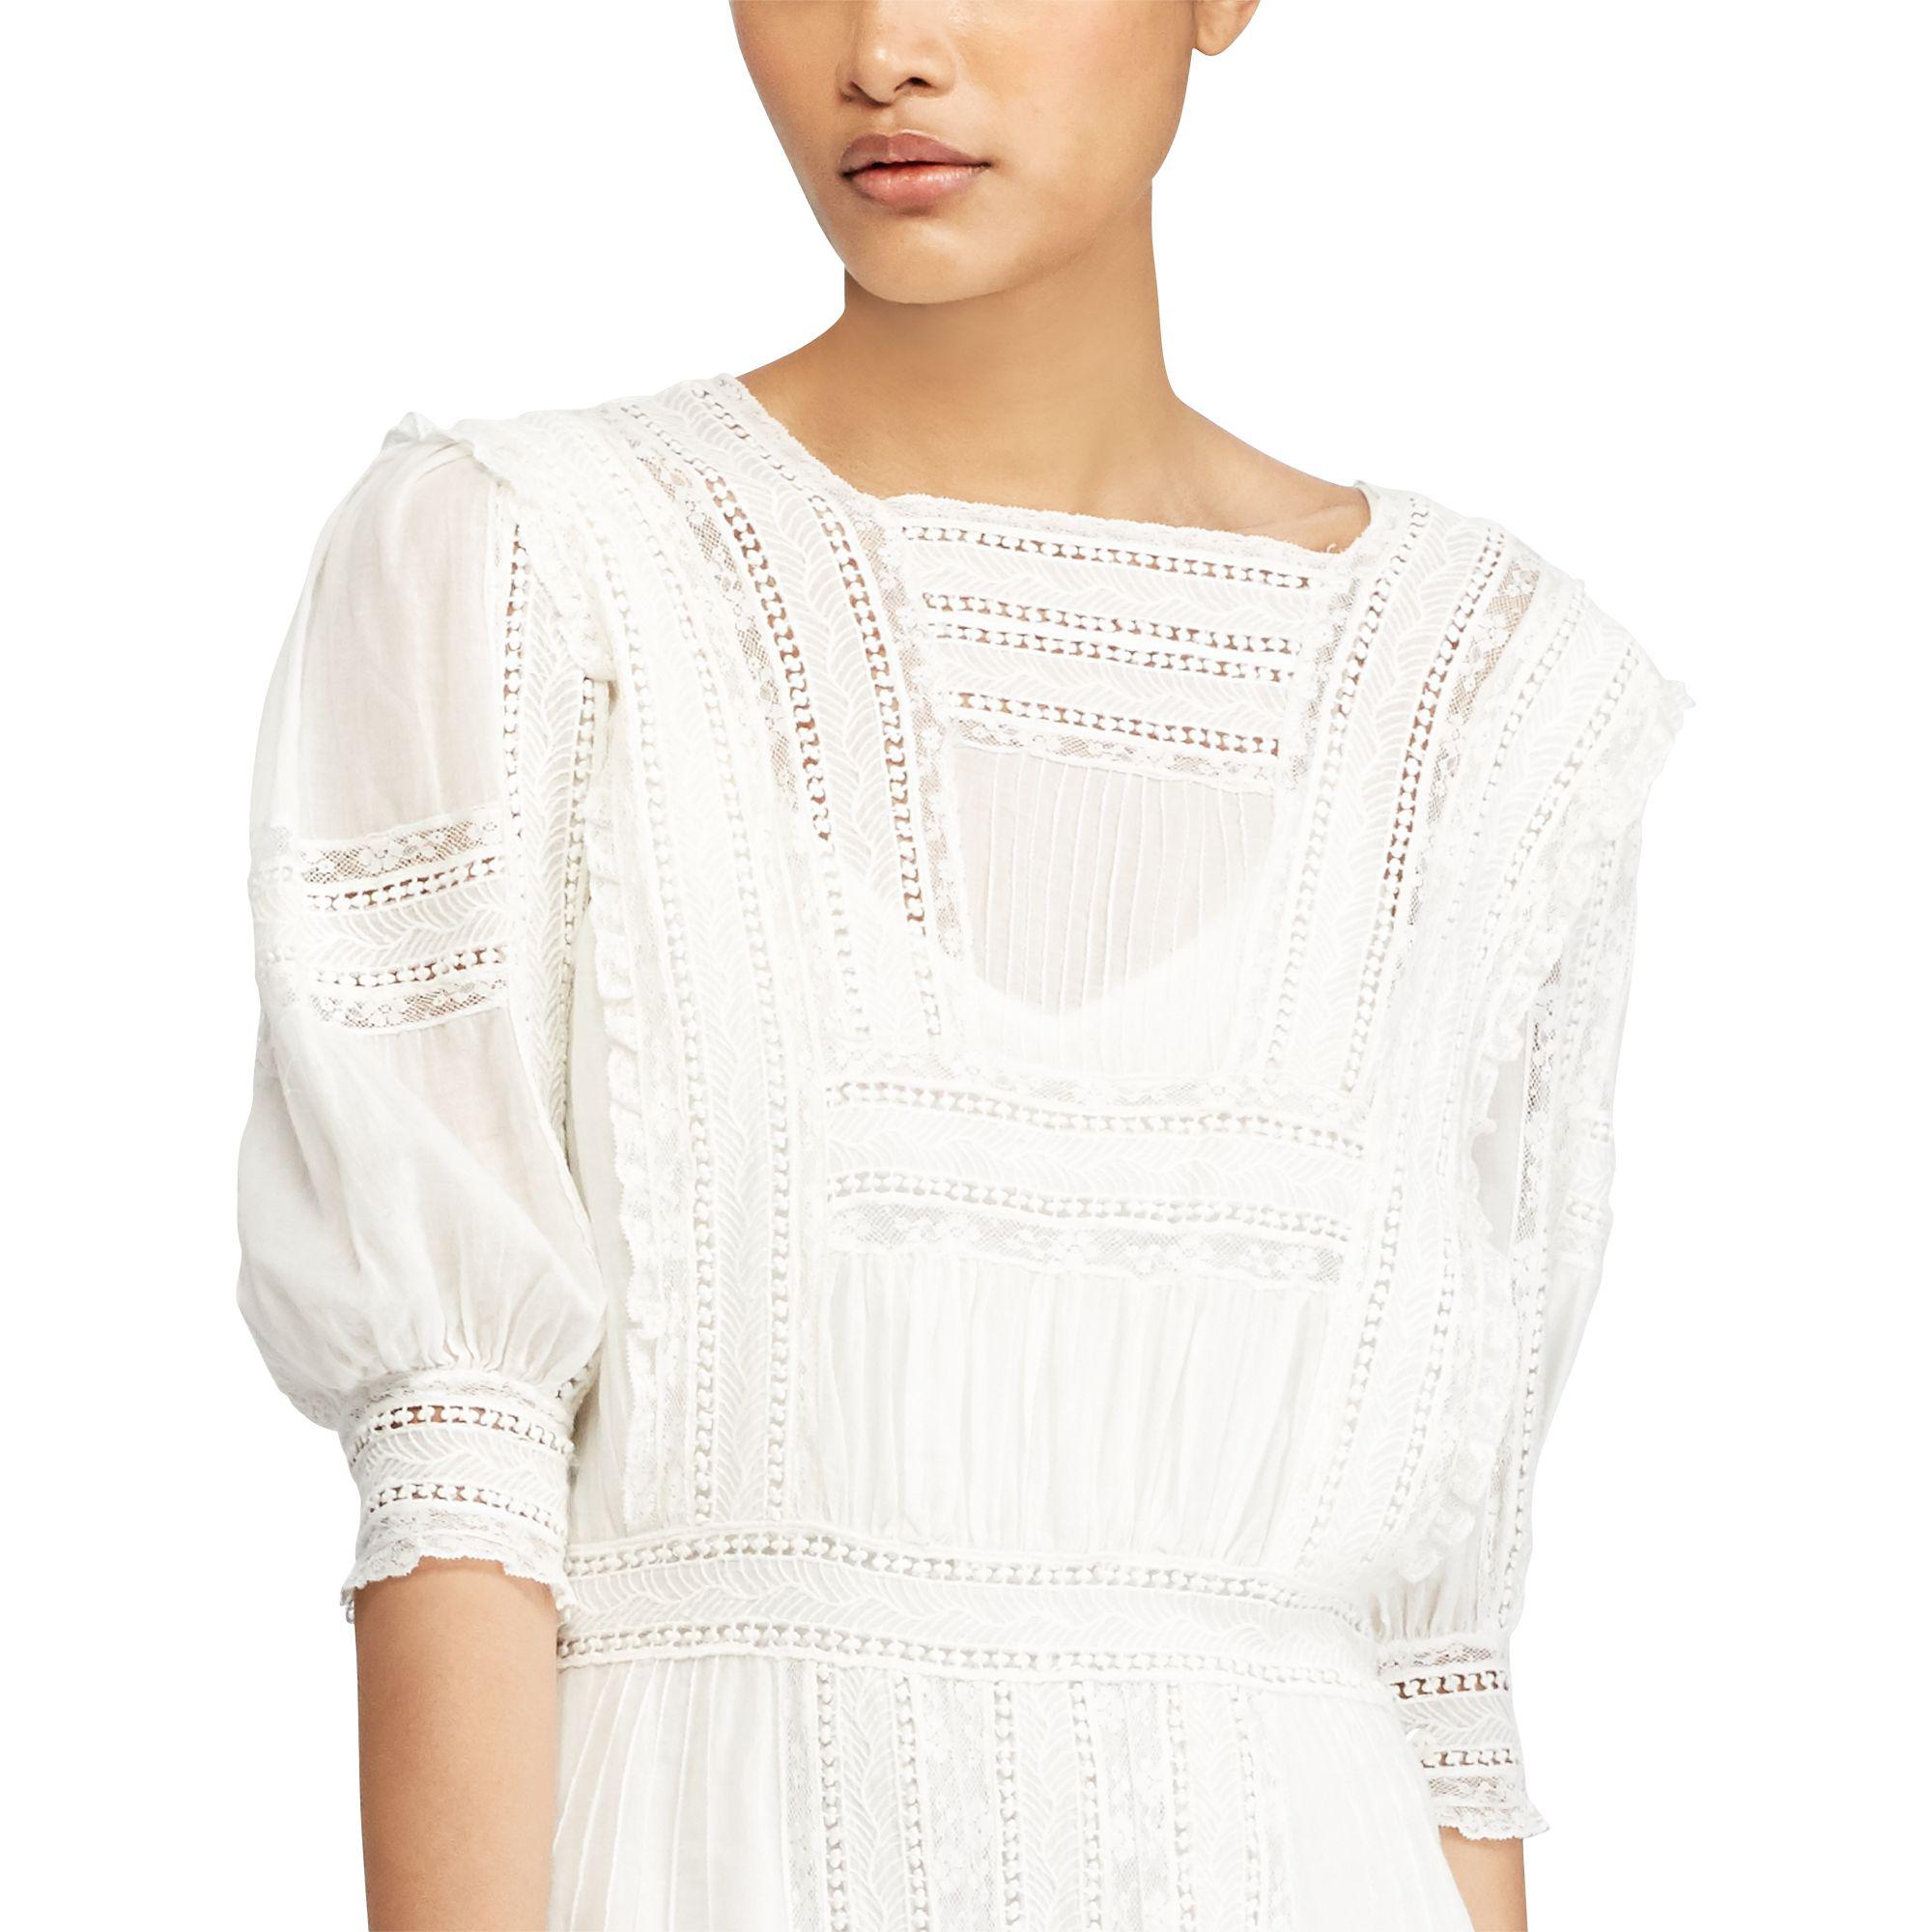 Polo Ralph Lauren Cotton Voile Midi Dress in White | Lyst